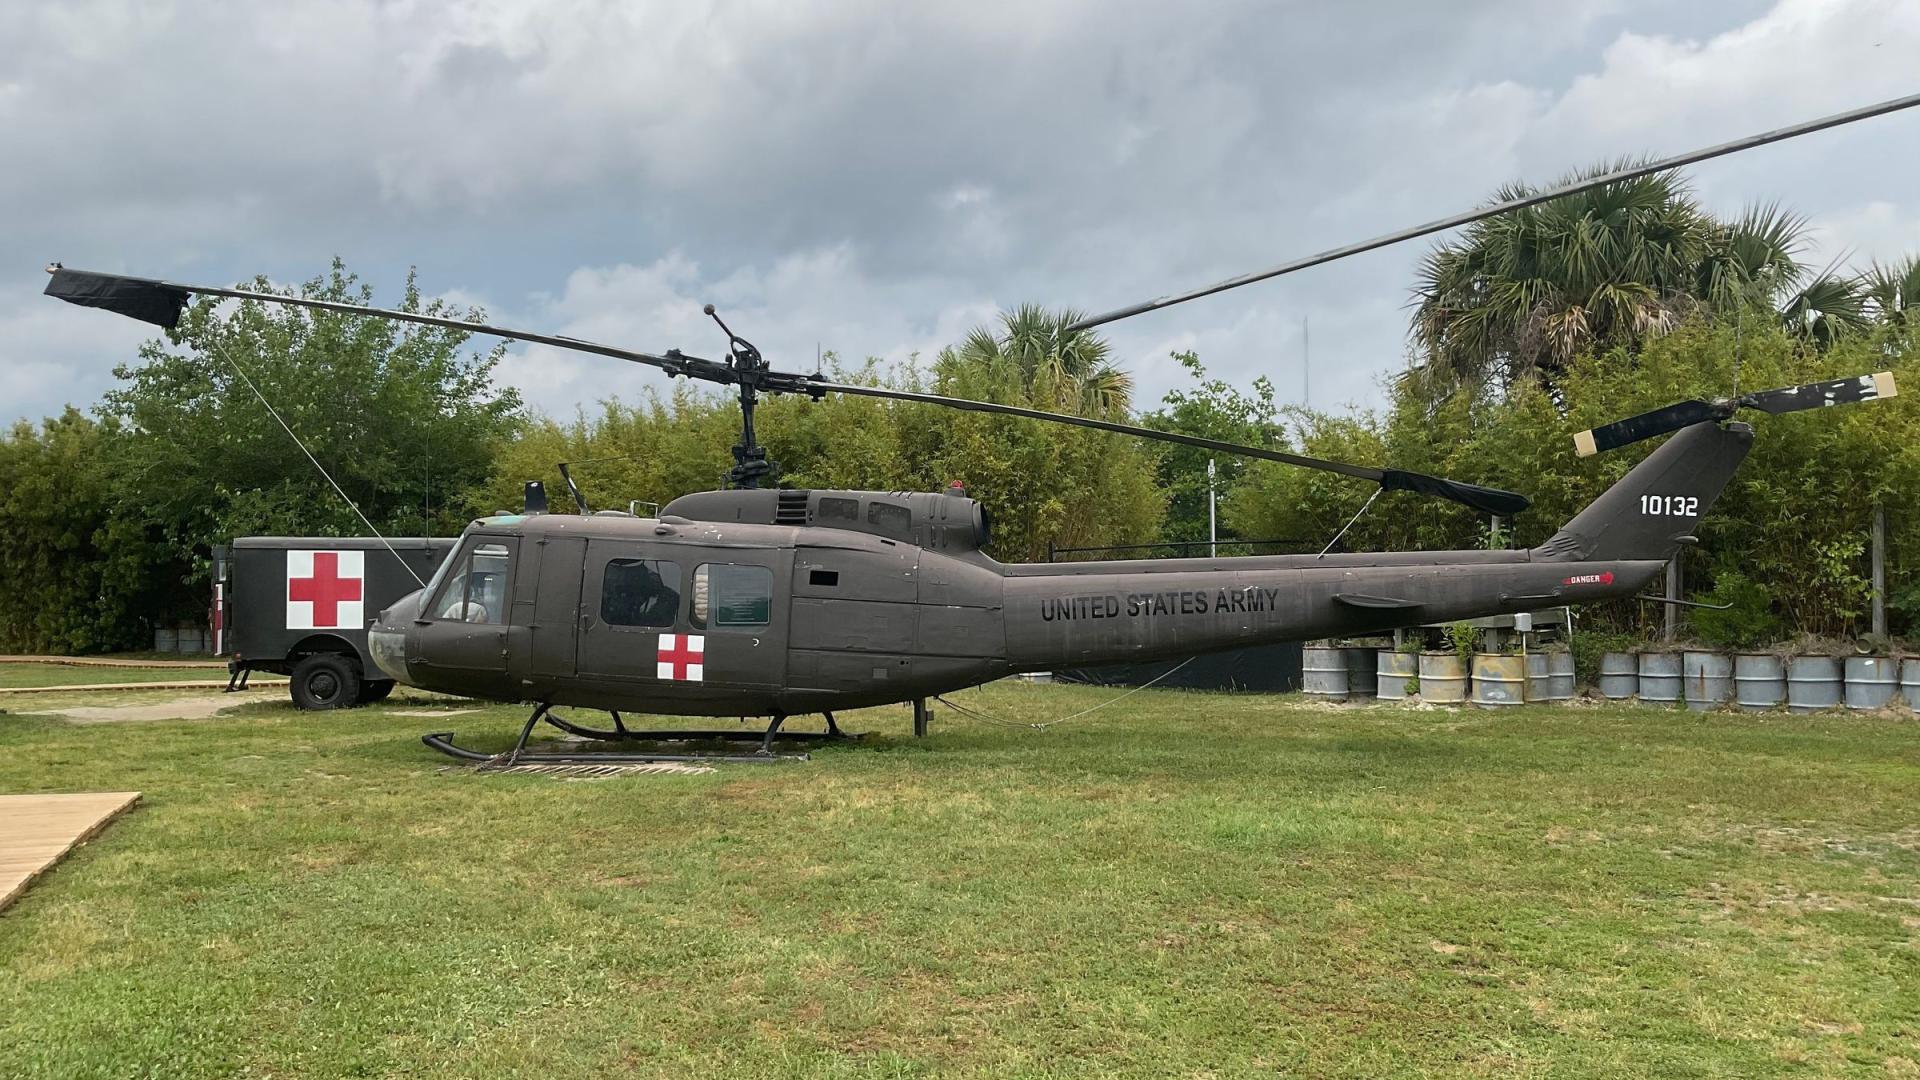 Primary Image of UH-1 Iroquois "Huey"